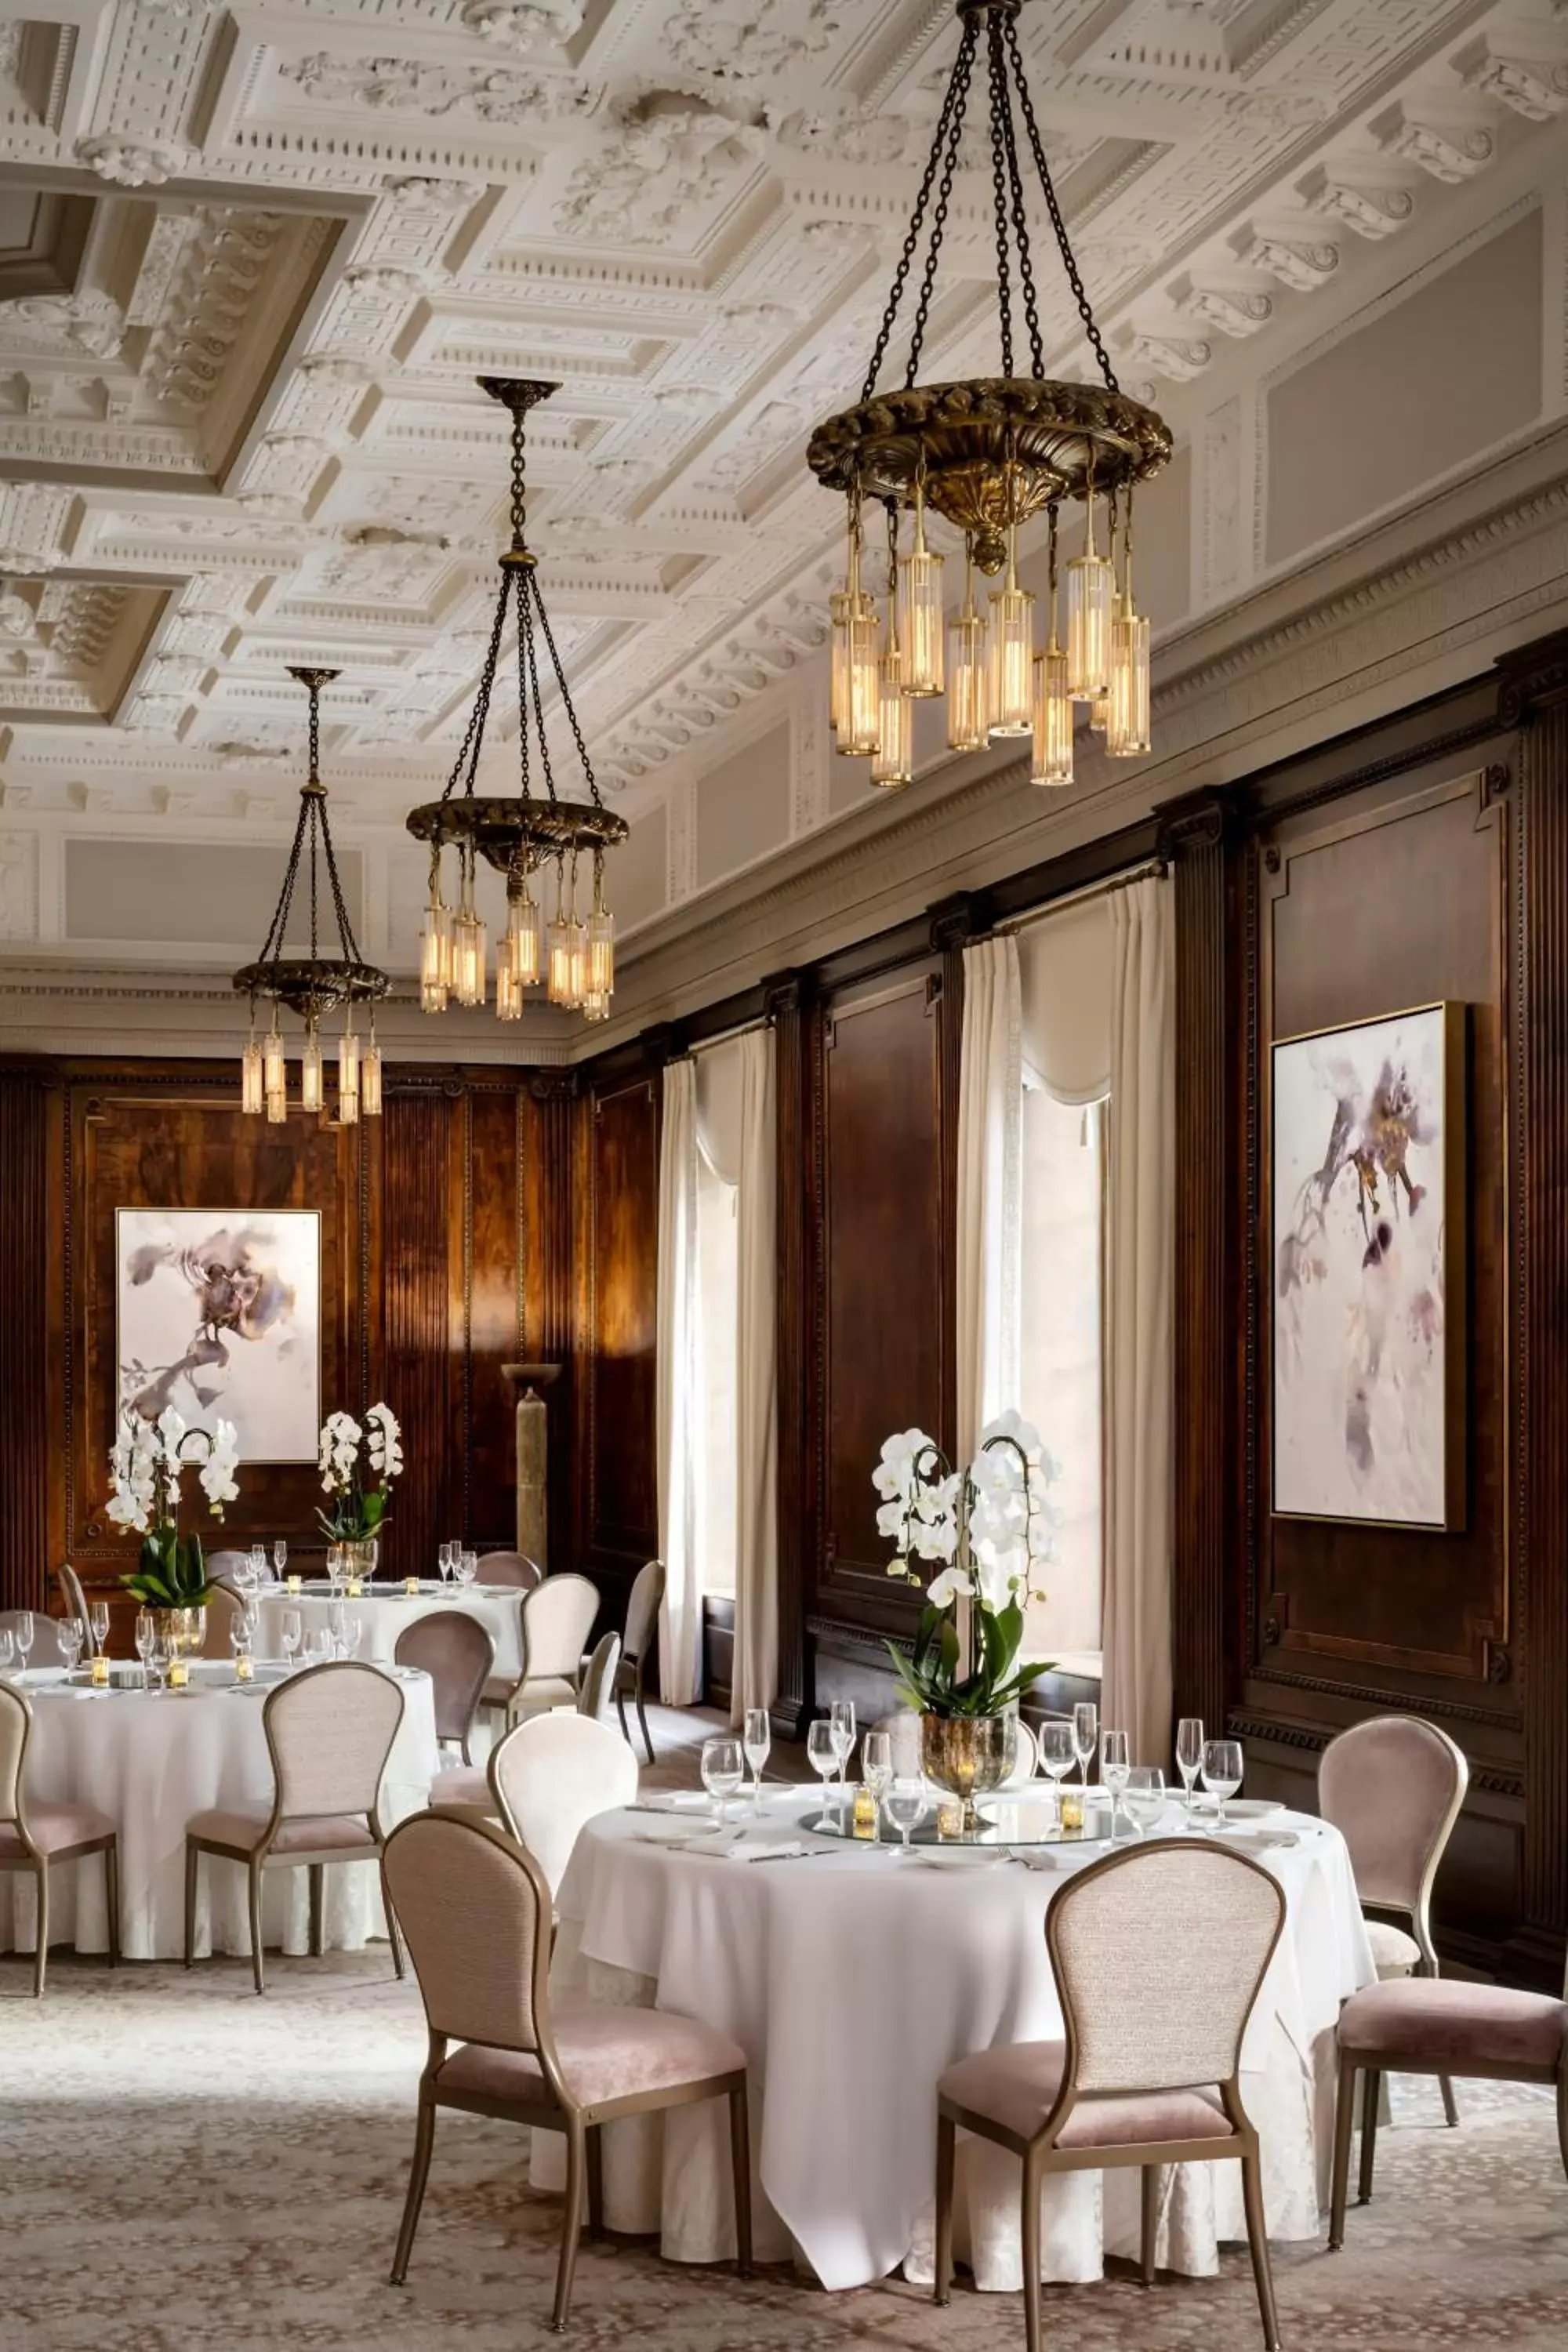 Banquet/Function facilities, Banquet Facilities in The Hermitage Hotel